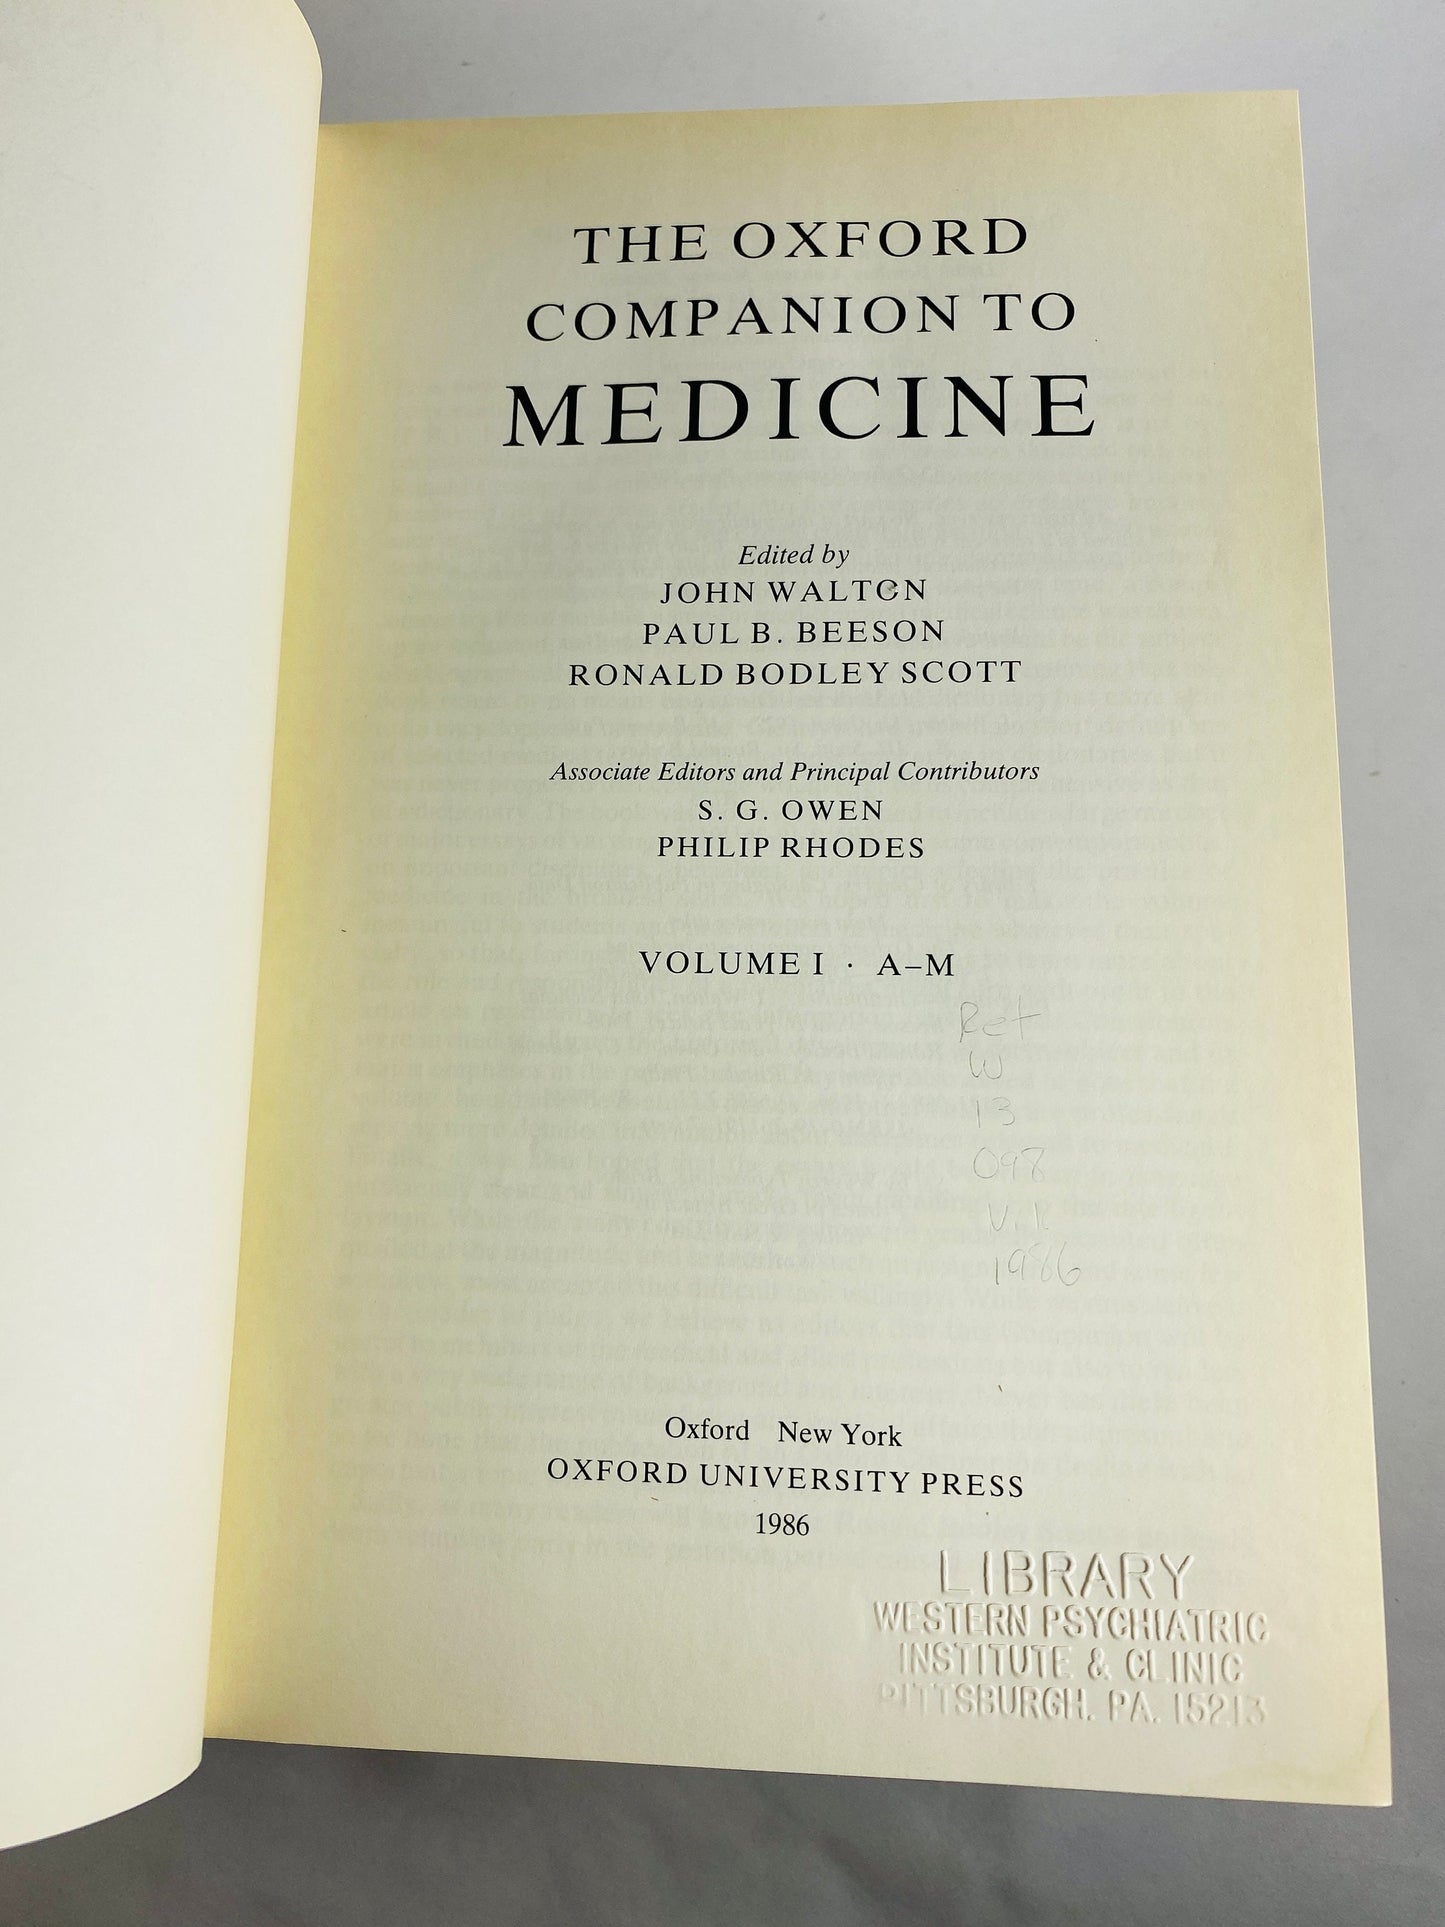 Oxford Companion to Medicine vintage book set circa 1986 blue & gold bookshelf decor Decorative old book lot